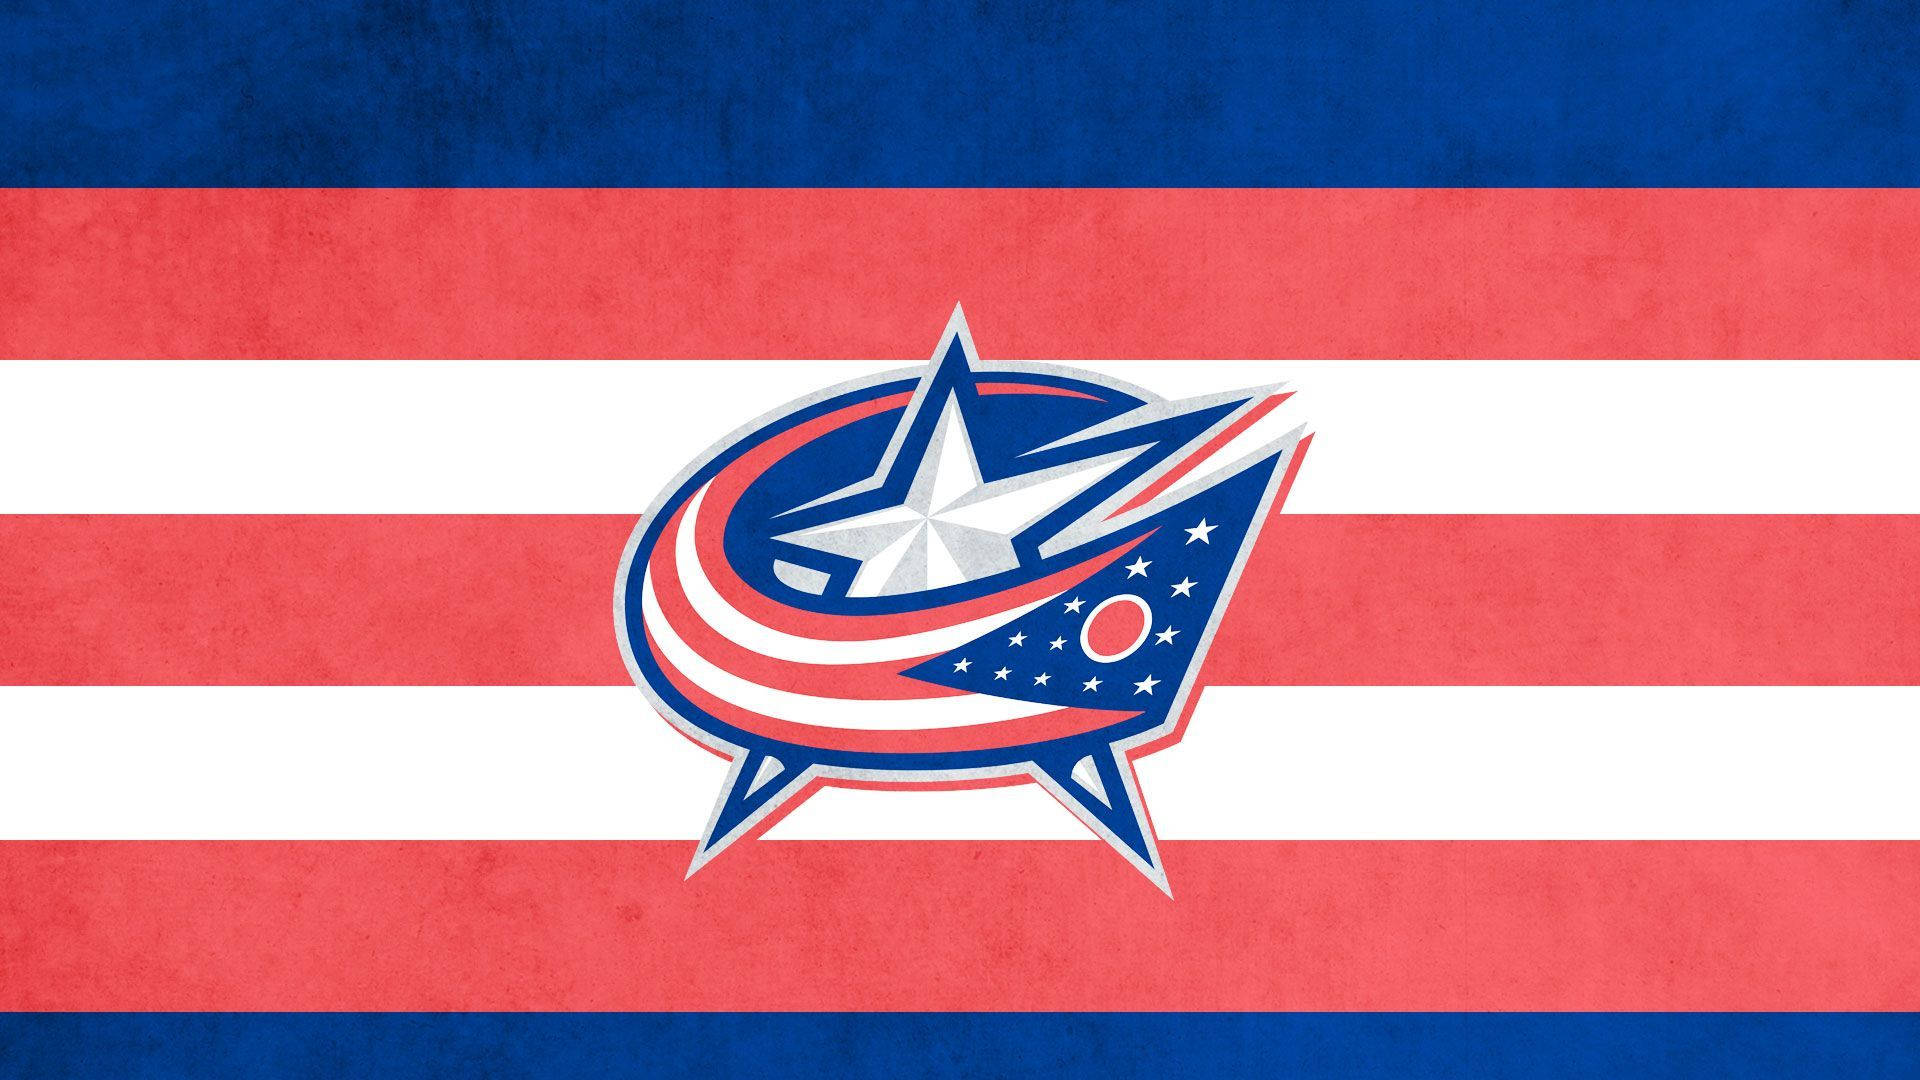 Columbus Blue Jackets Hockey Team on Striped Background Wallpaper